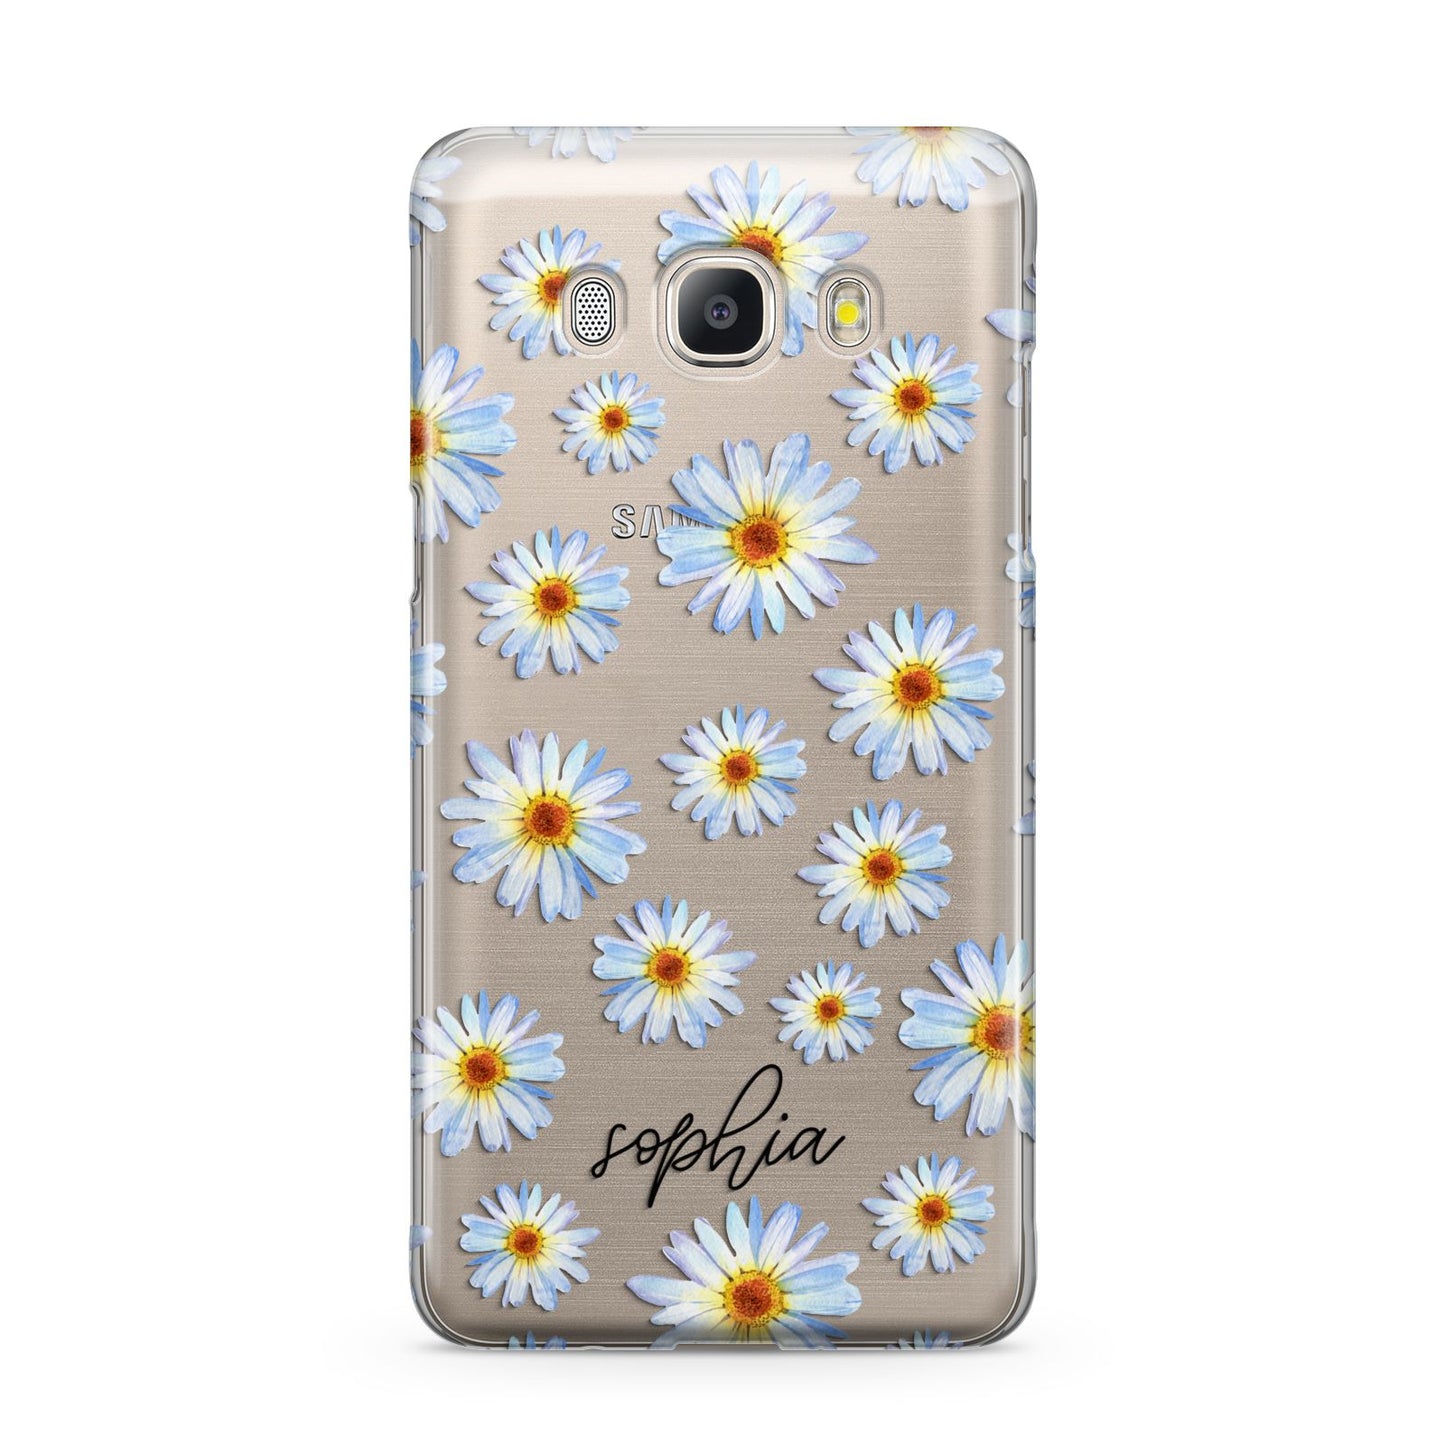 Personalised Daisy Samsung Galaxy J5 2016 Case